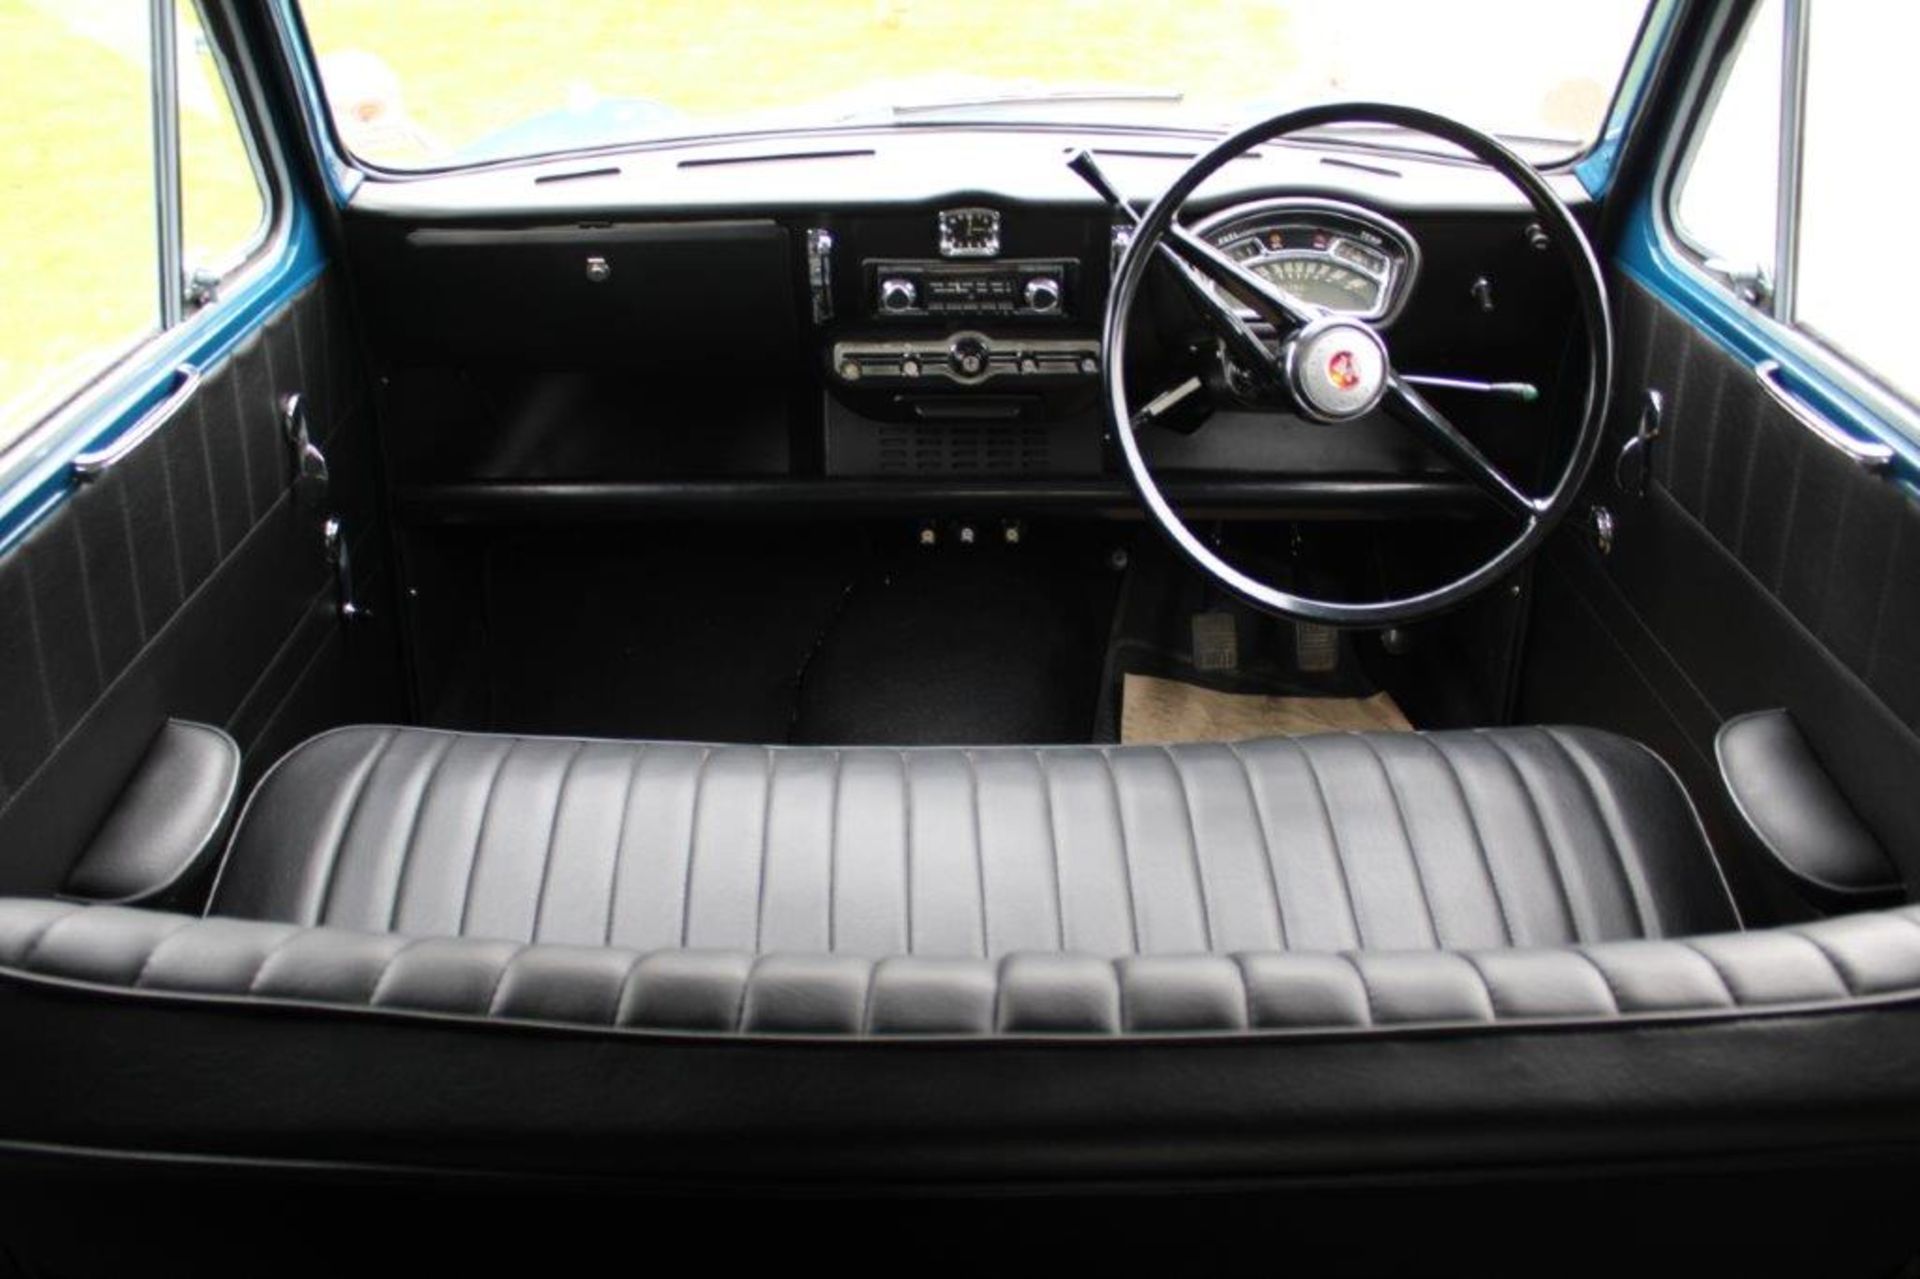 1969 Morris A60 Half Ton Van - Image 19 of 21